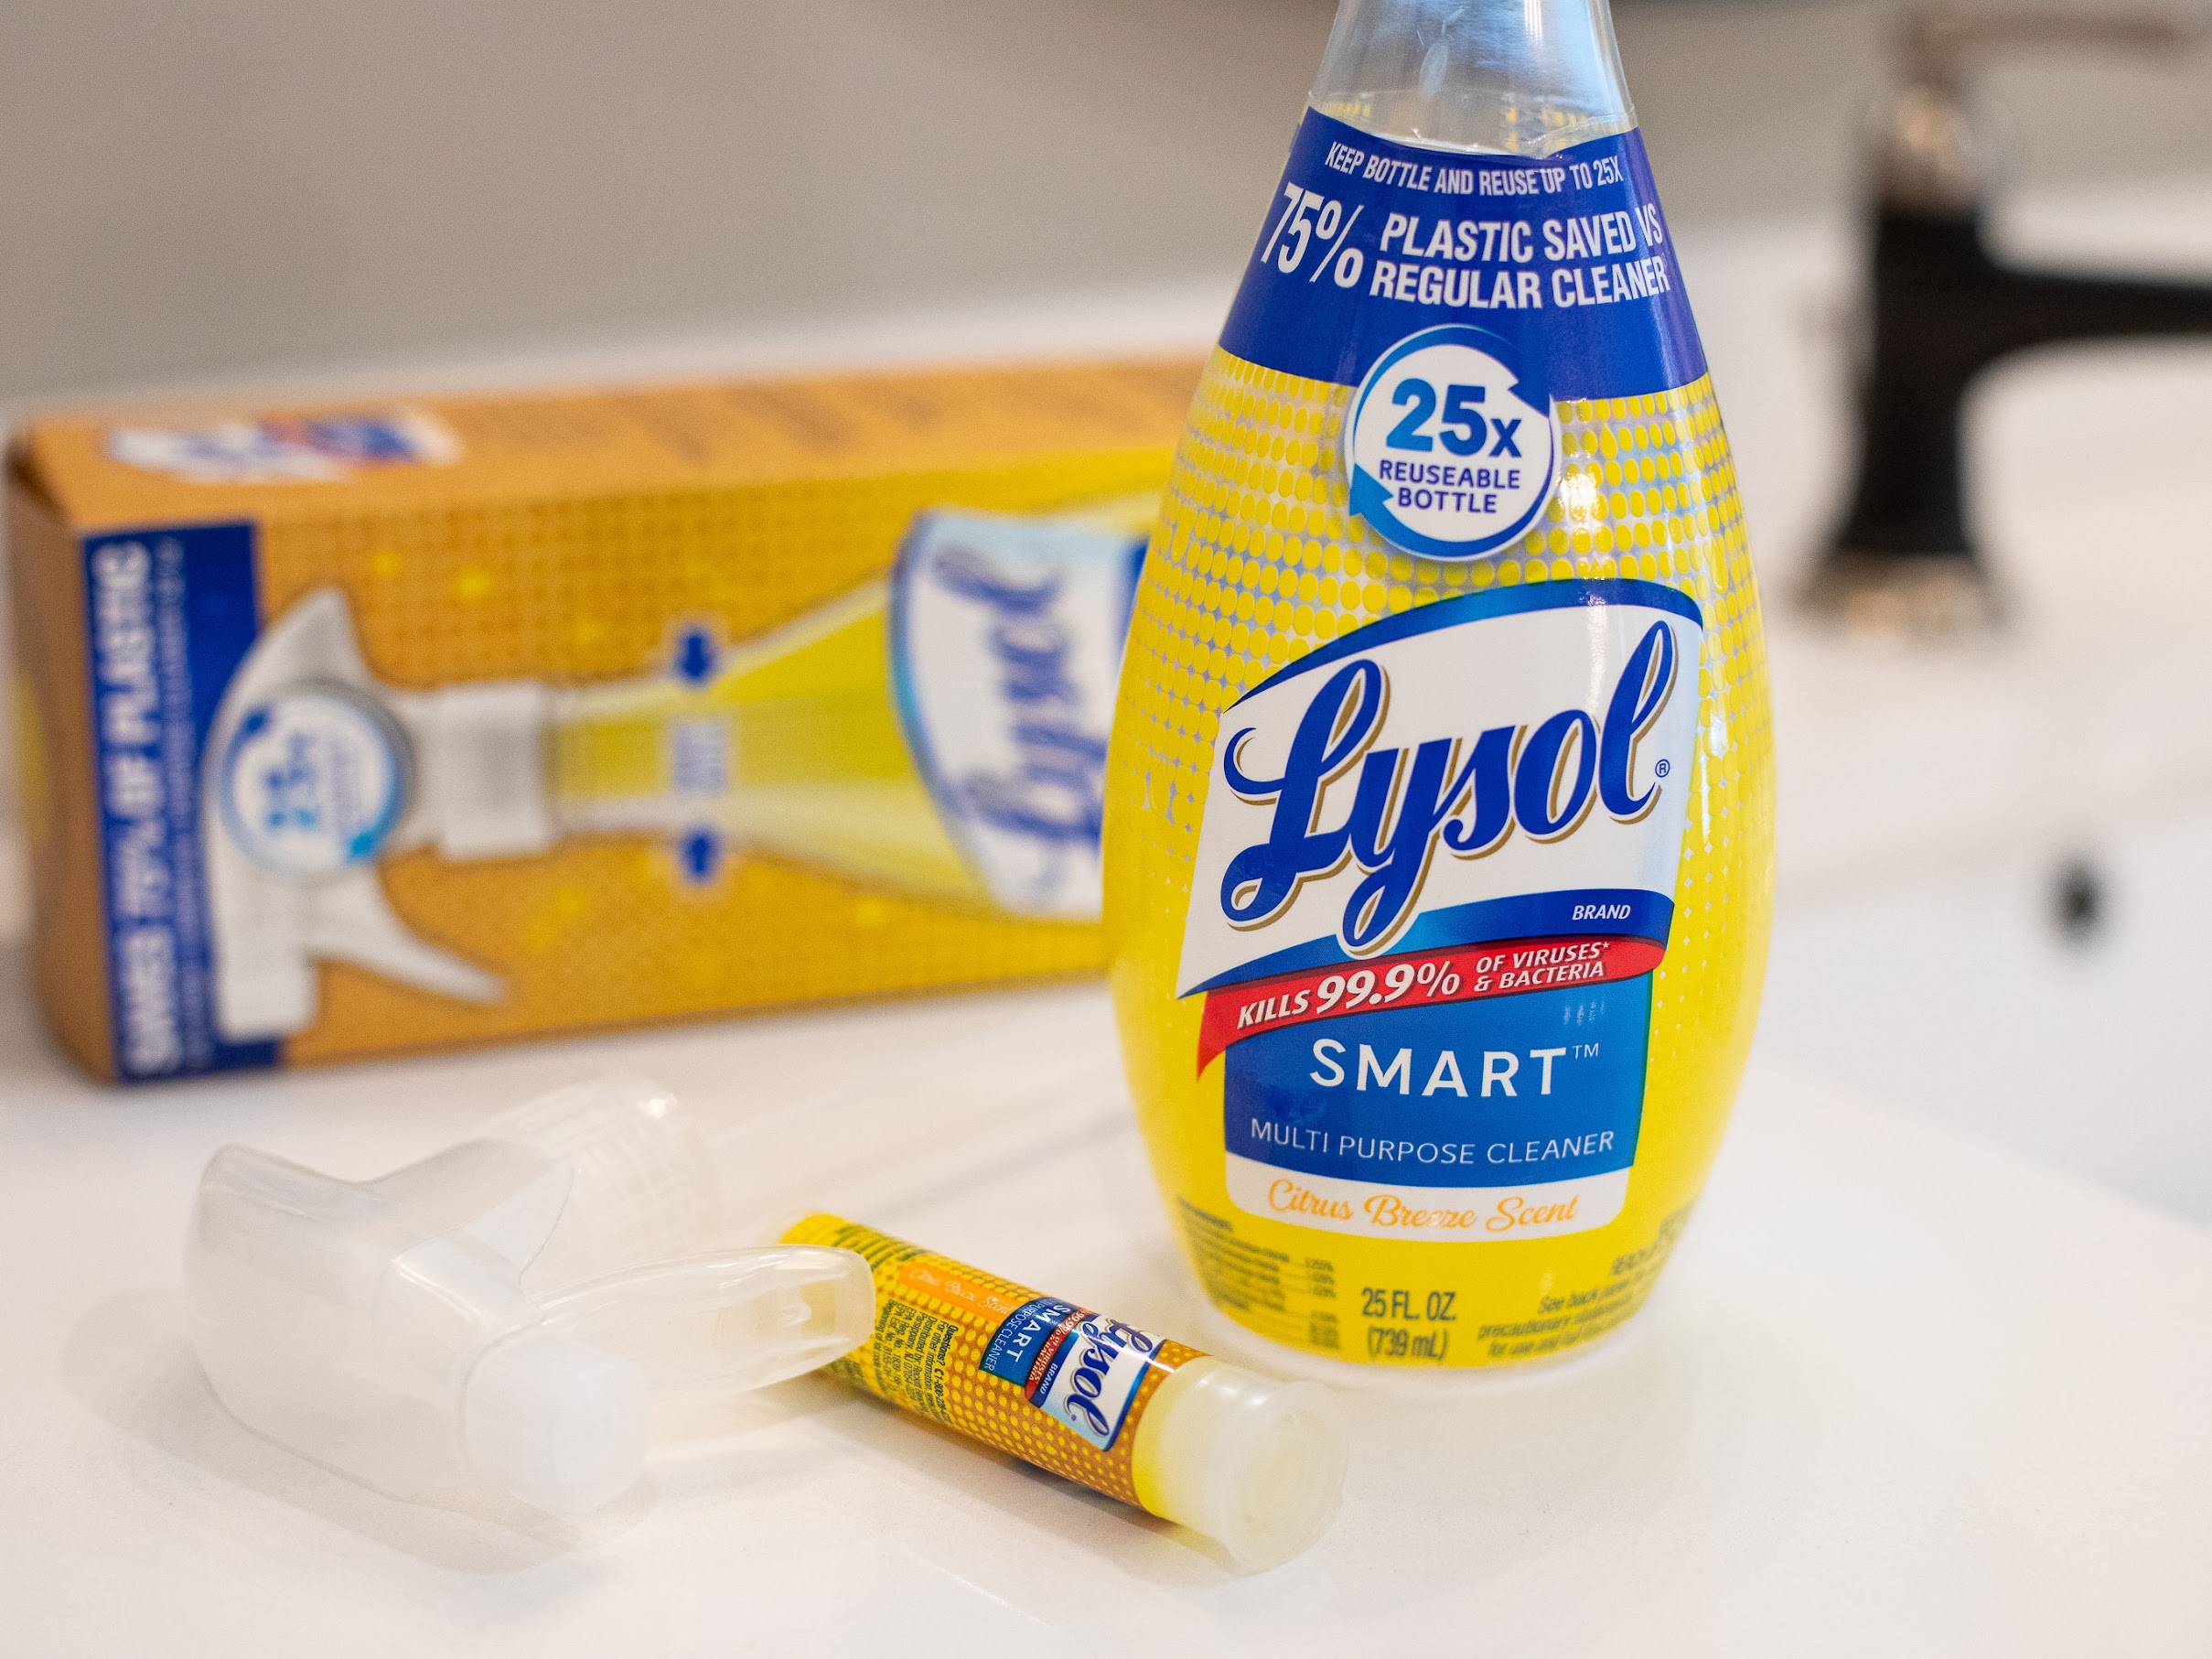 Lysol Smart Multi Purpose Cleaner Starter Kit As Low As $1.95 At Publix – Plus Cheap Refills